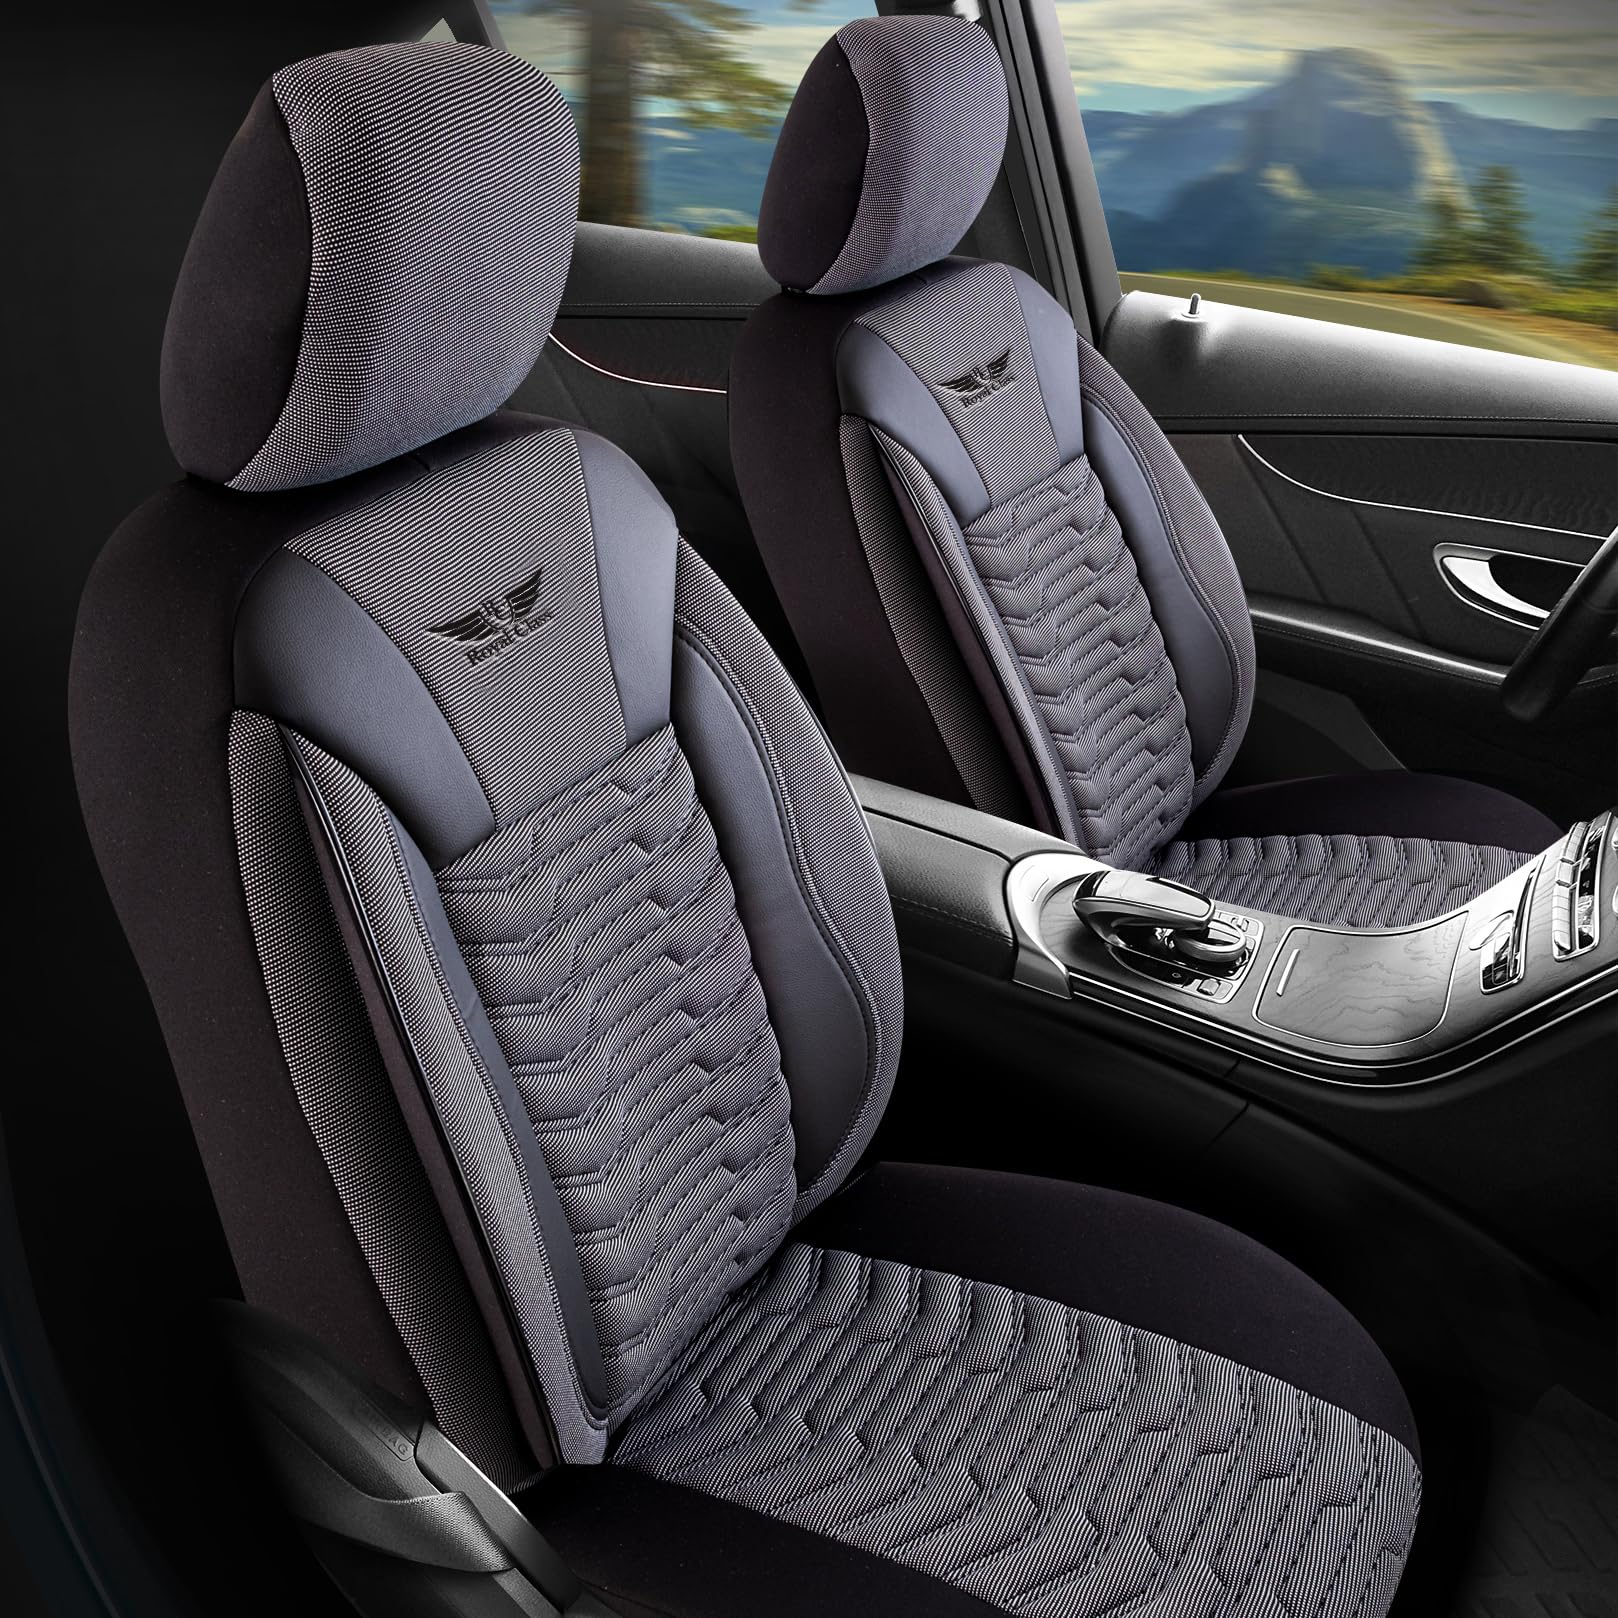 Royal Class Auto Sitzbezüge kompatibel für Toyota Hilux in Dark Grau Komplett Fahrer und Beifahrer mit Rücksitzbank, Autositzbezug Schonbezug Sitzbezug Komplettset 5-Sitze Kunstleder von RC Royal Class